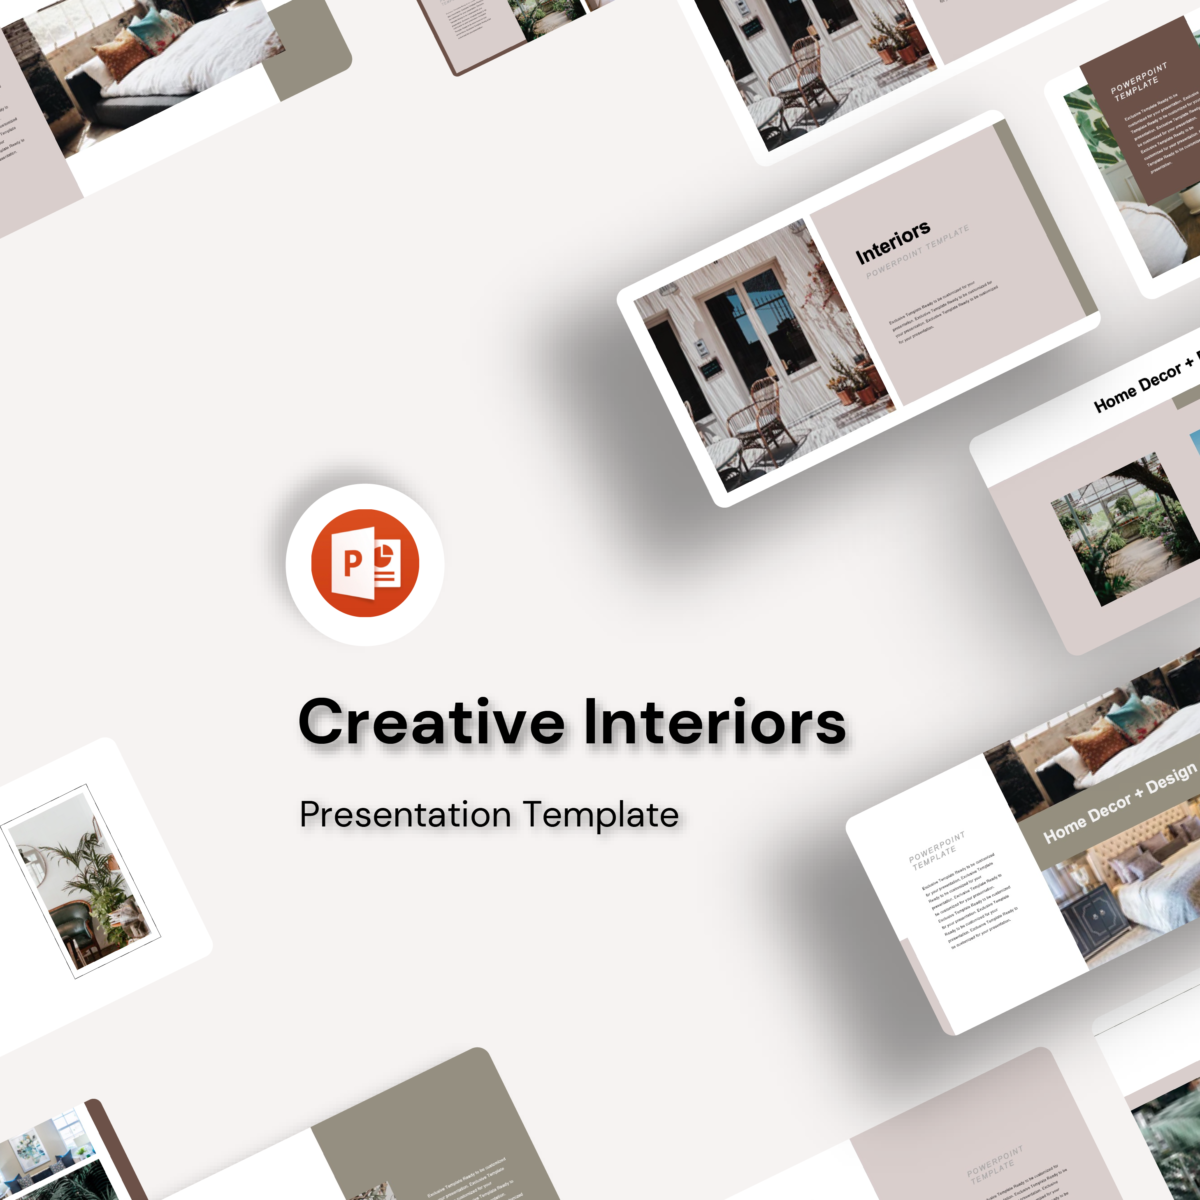 Creative Interiors Design Presentation Template